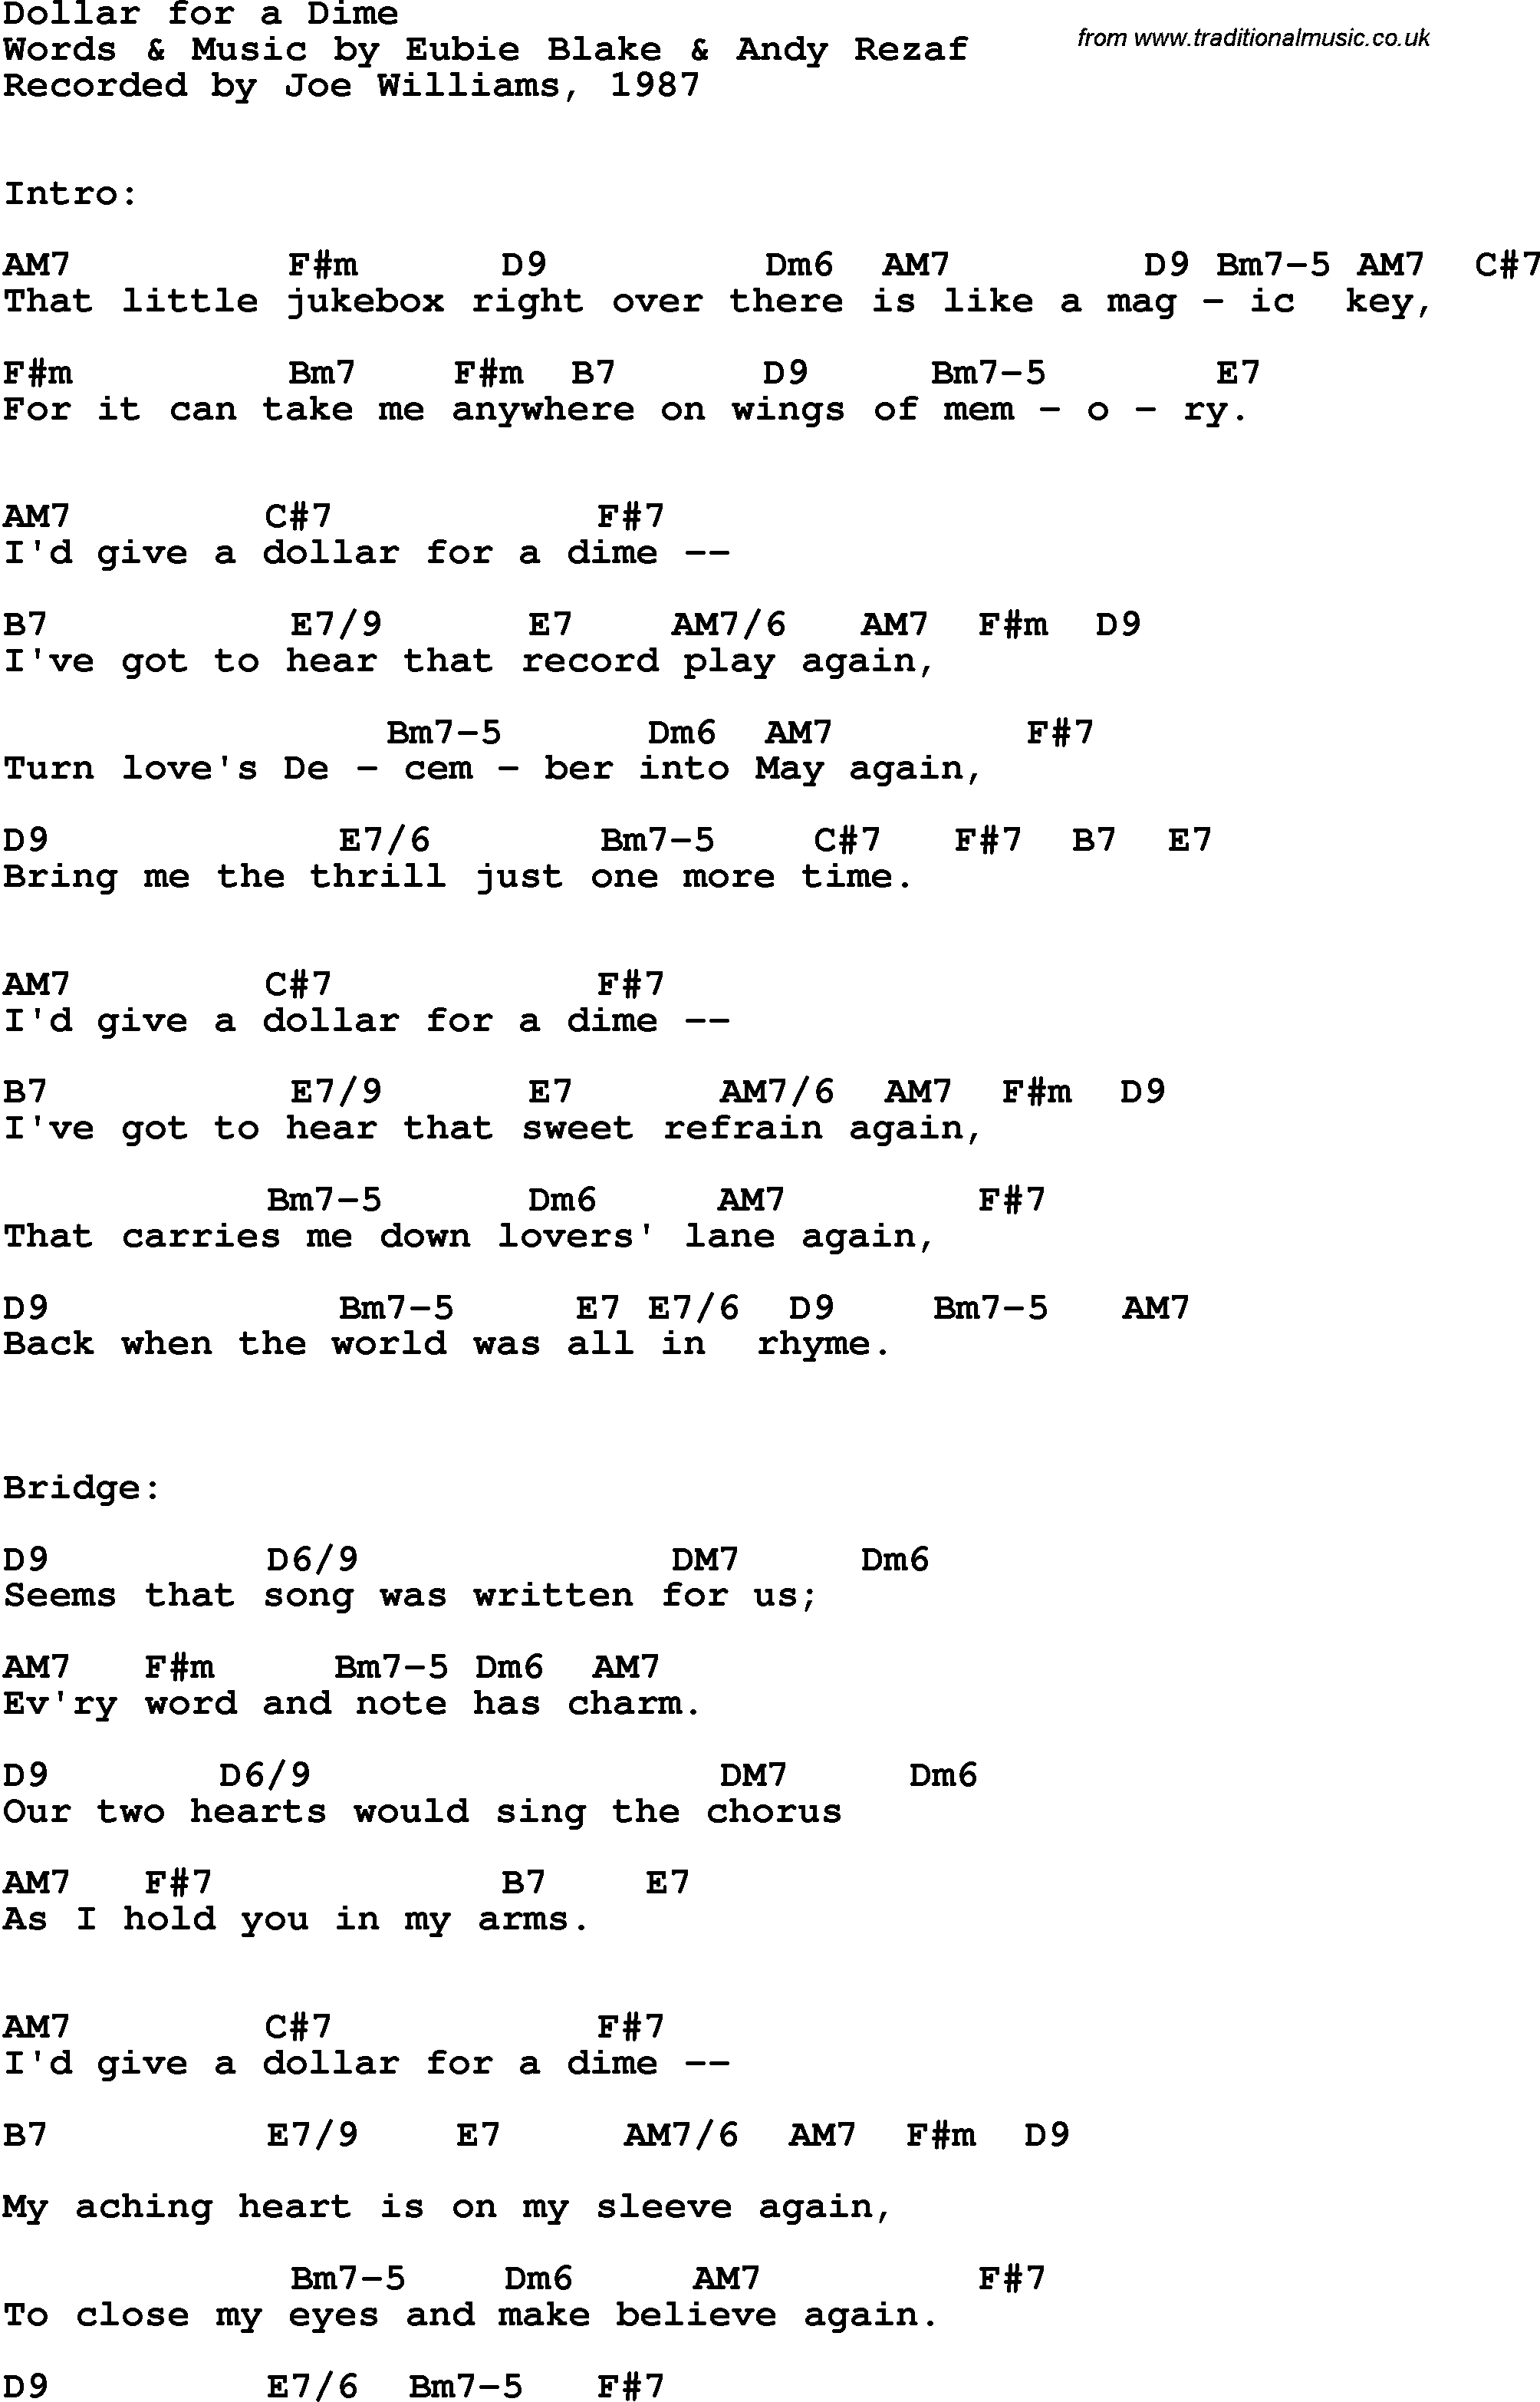 Song Lyrics with guitar chords for Dollar For A Dime - Joe Williams, 1987